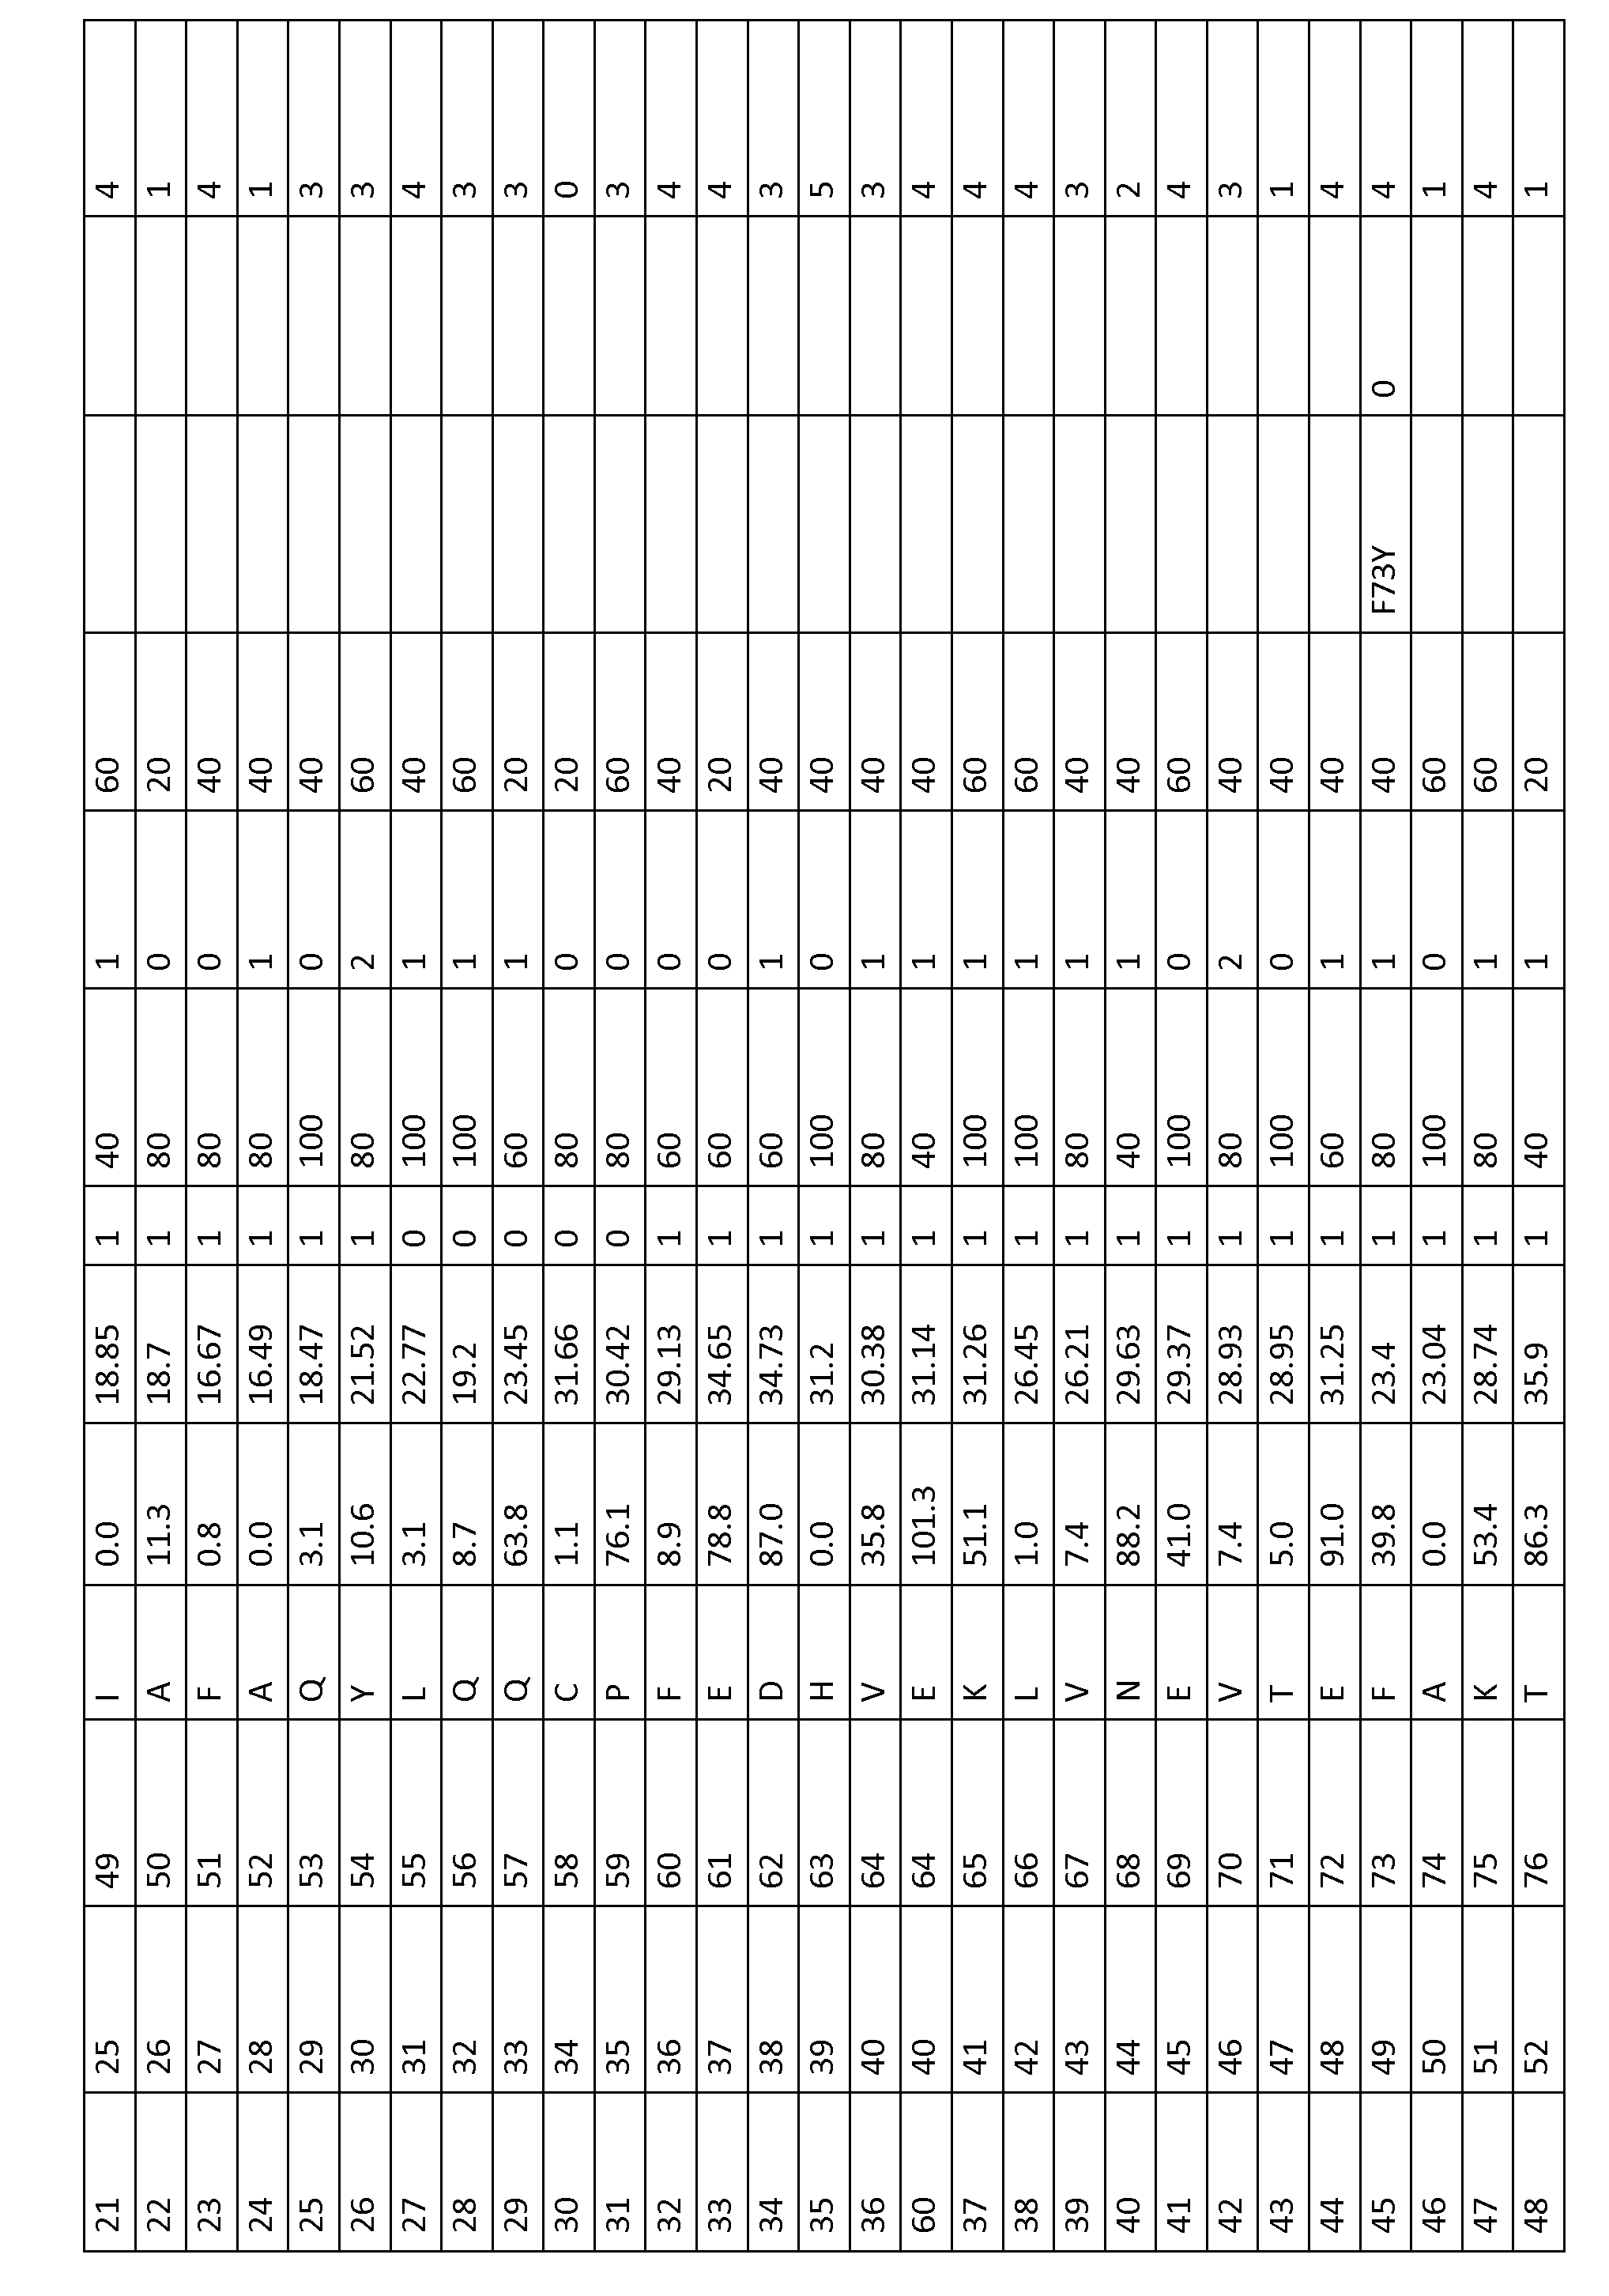 Albumin variants and conjugates